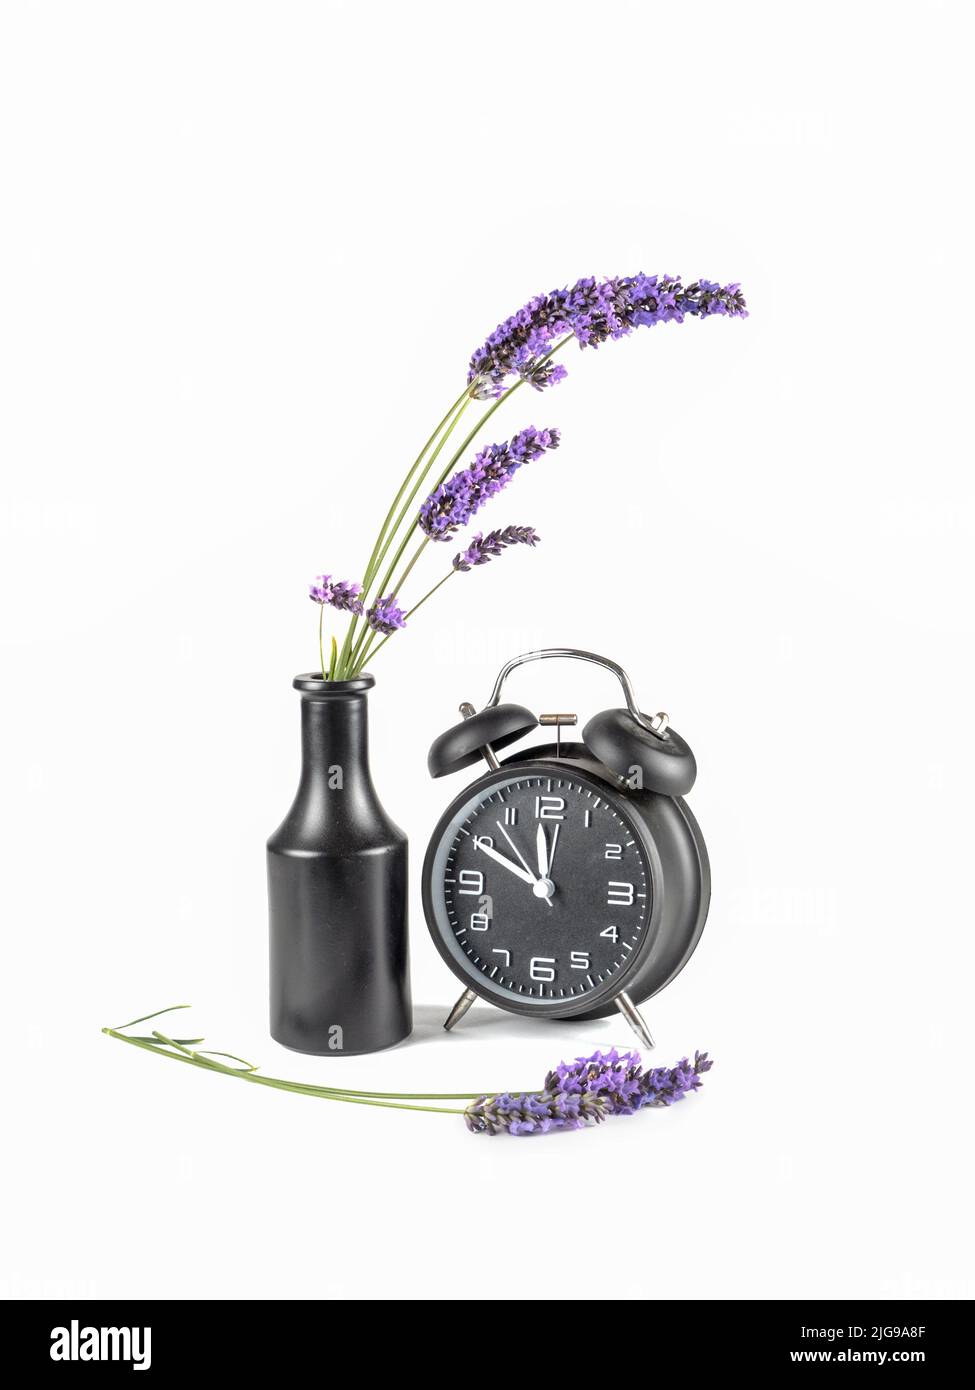 Lavender in dark vase with old alarm clock. Time passing concept. Stock Photo